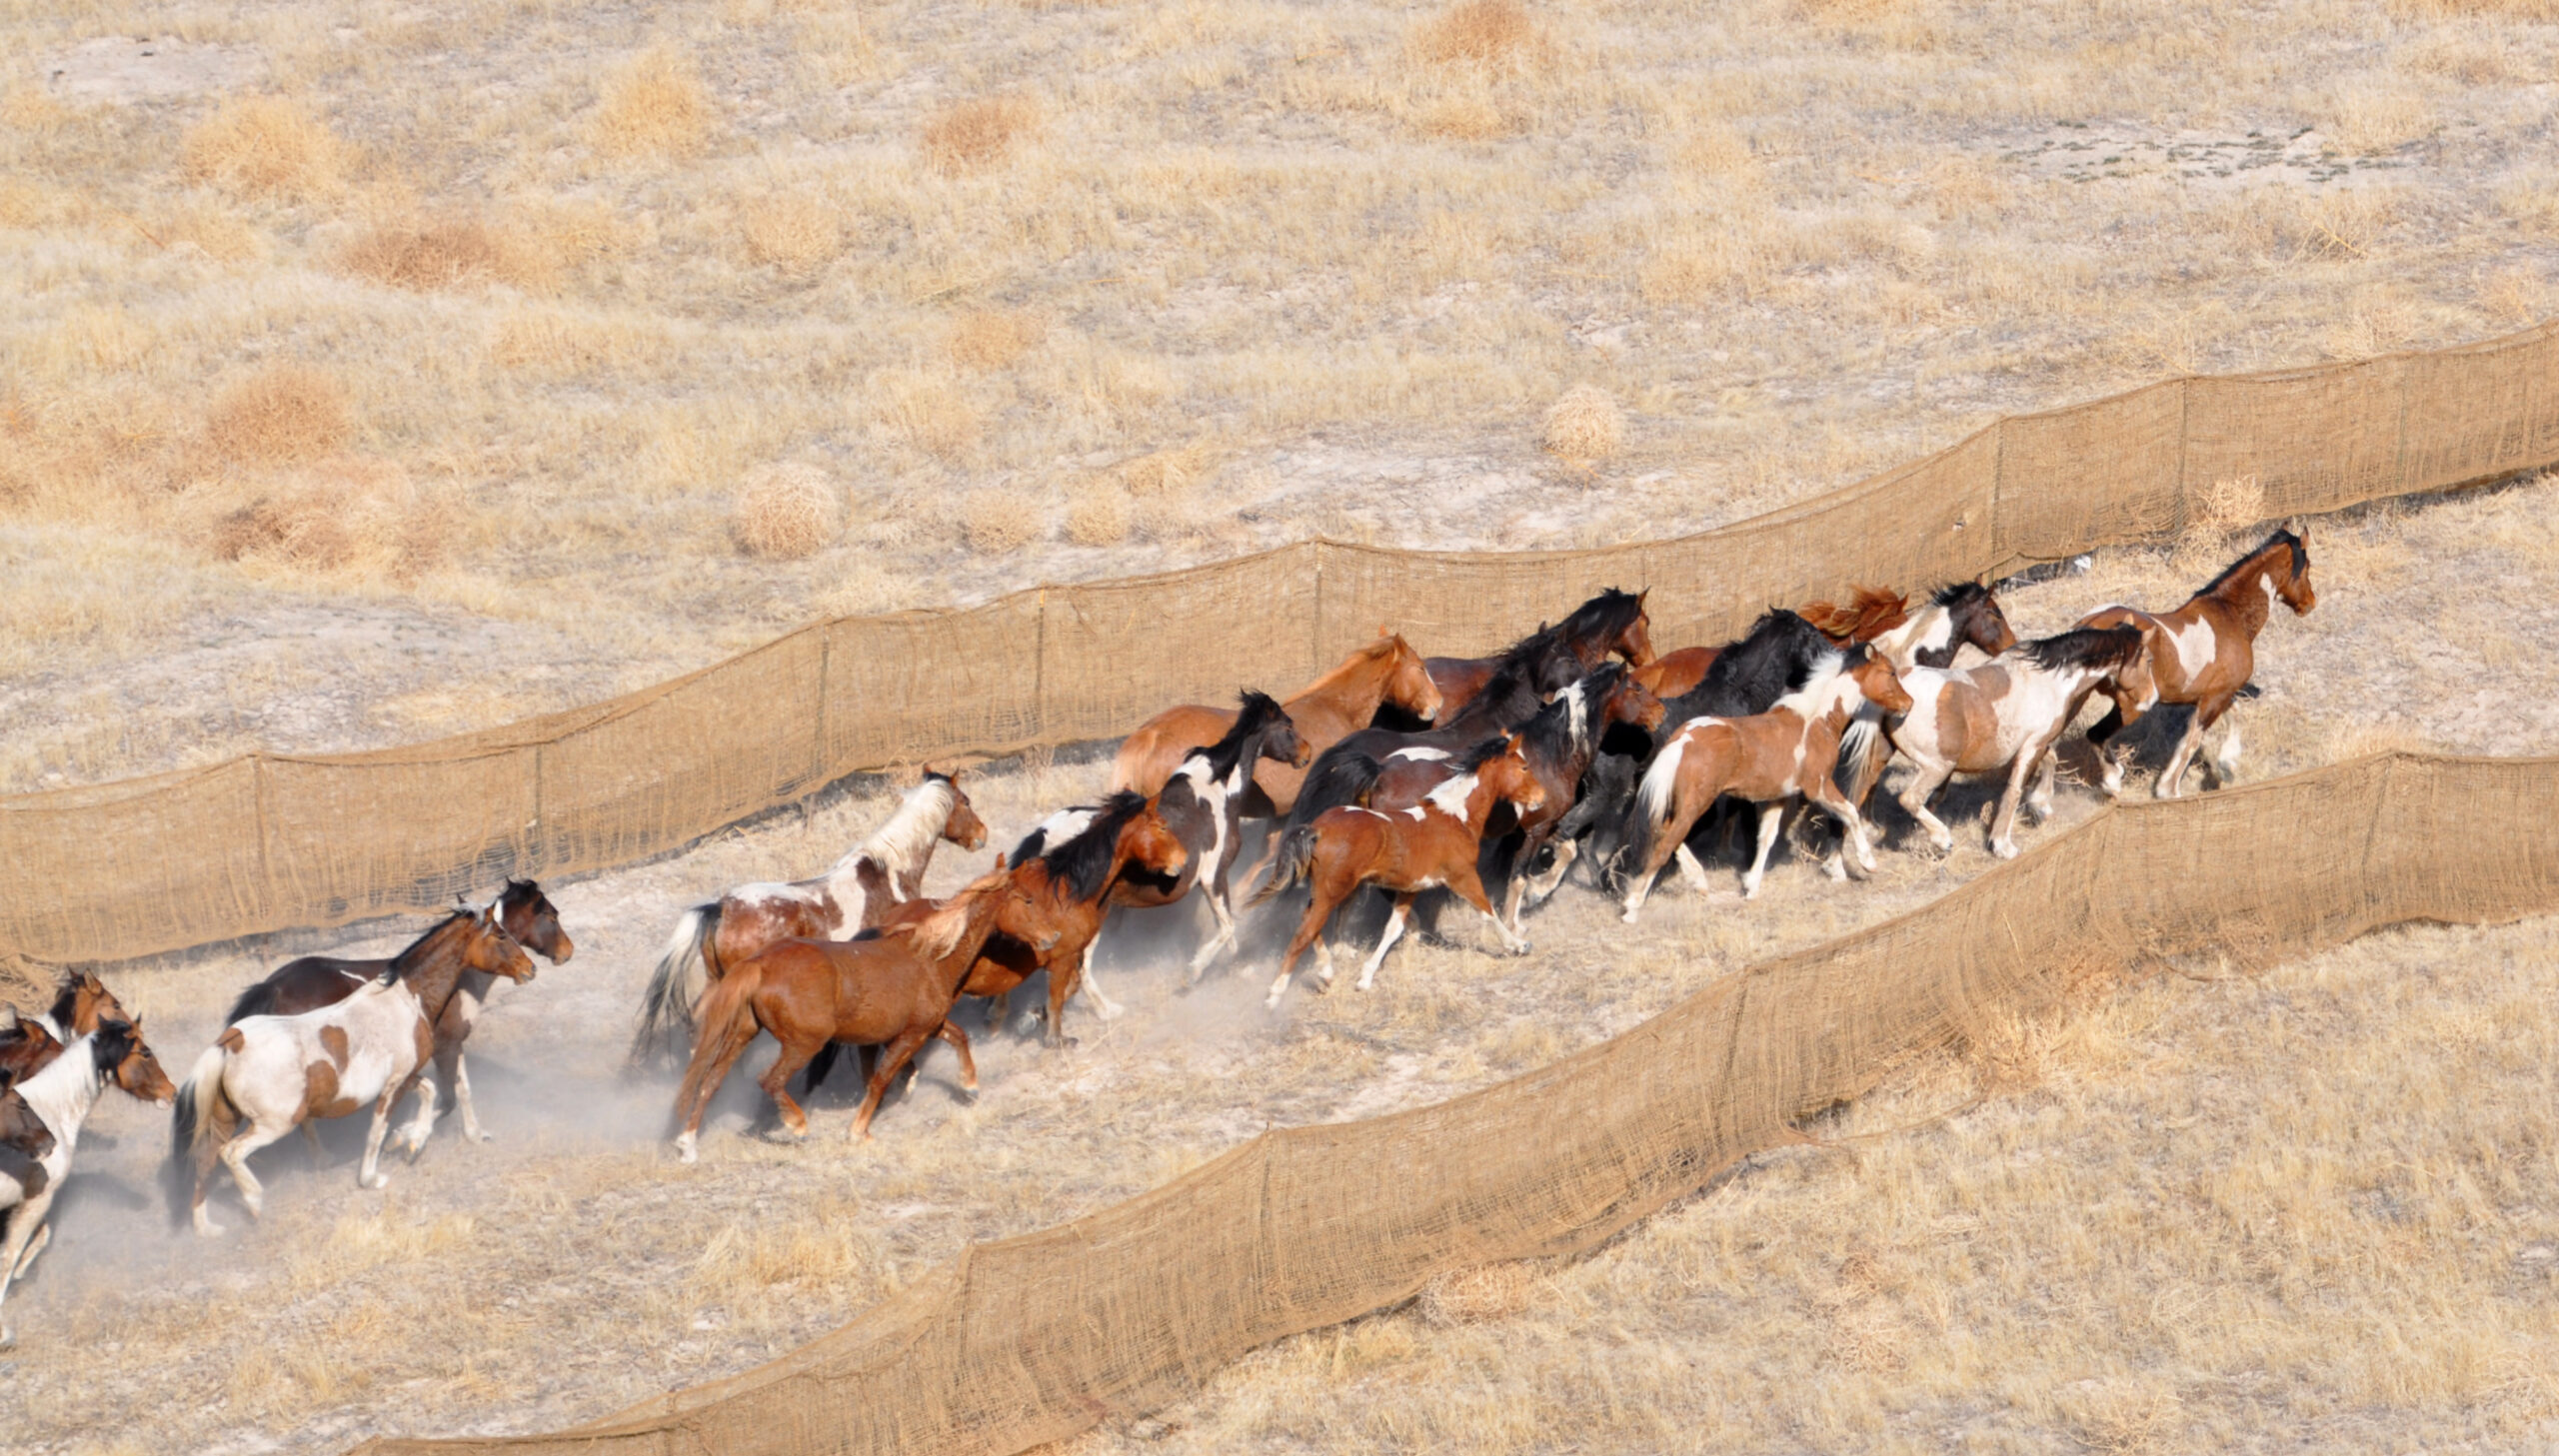 Wild horses enter a chute during a gather.